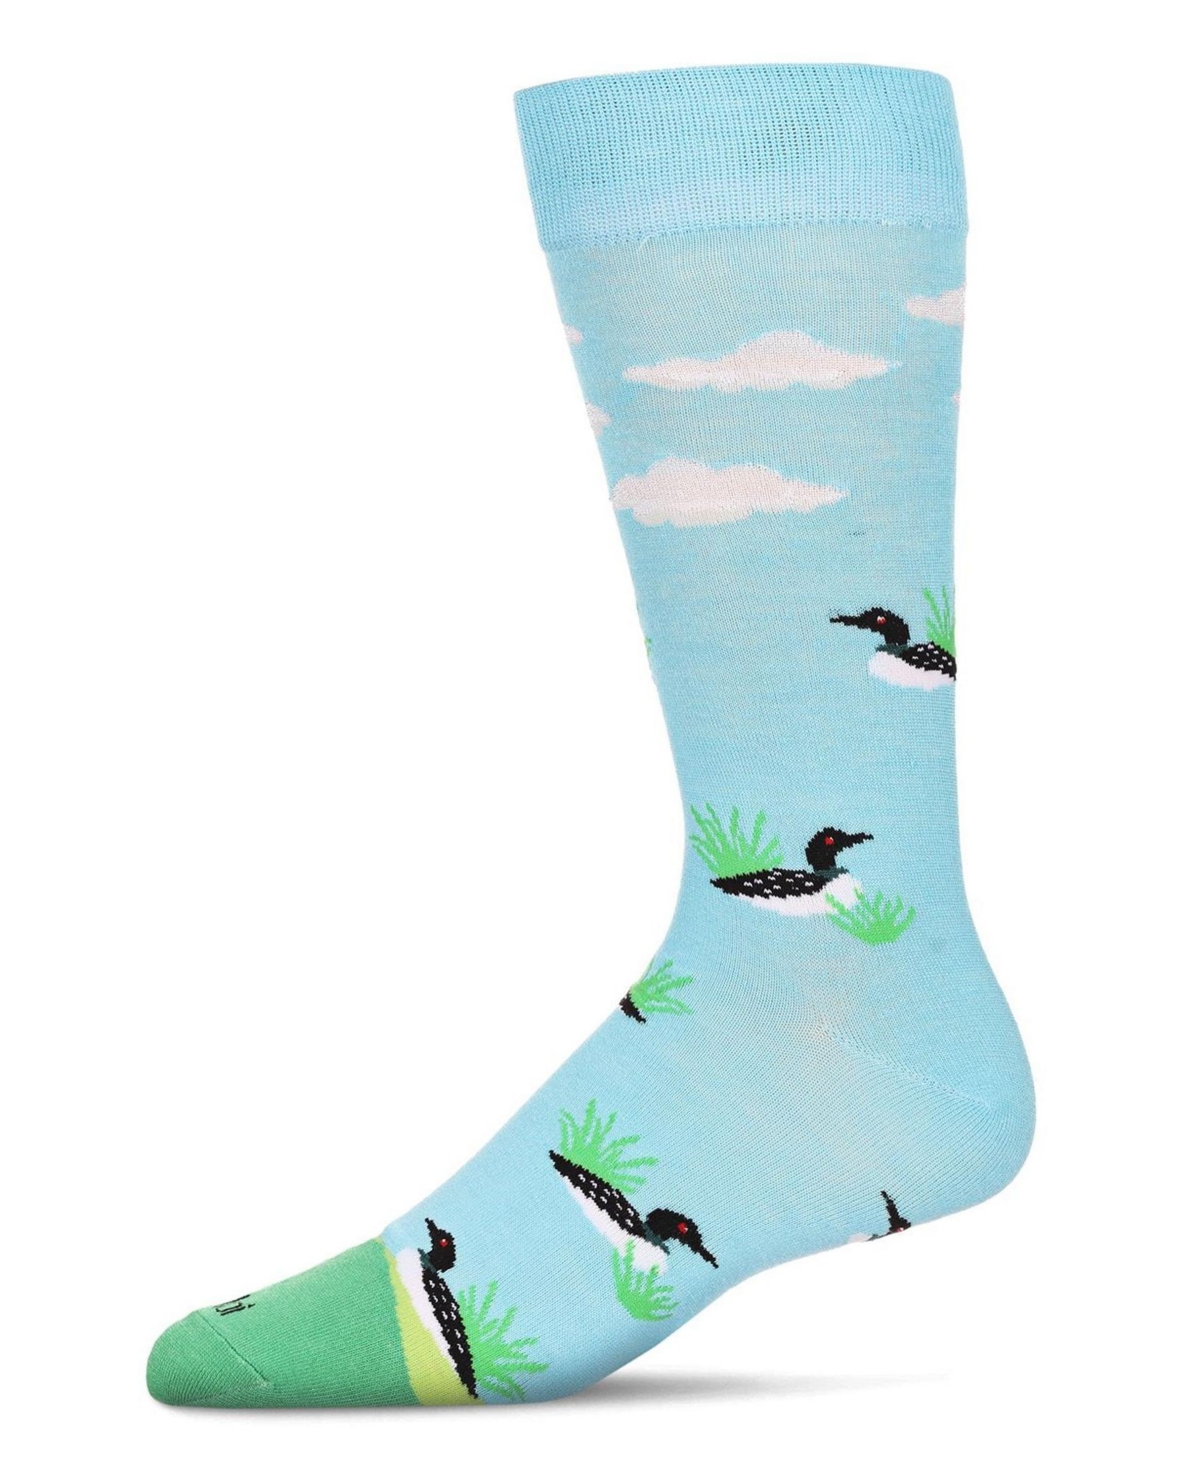 Men's Loon Bird Novelty Crew Socks - Blue Topaz